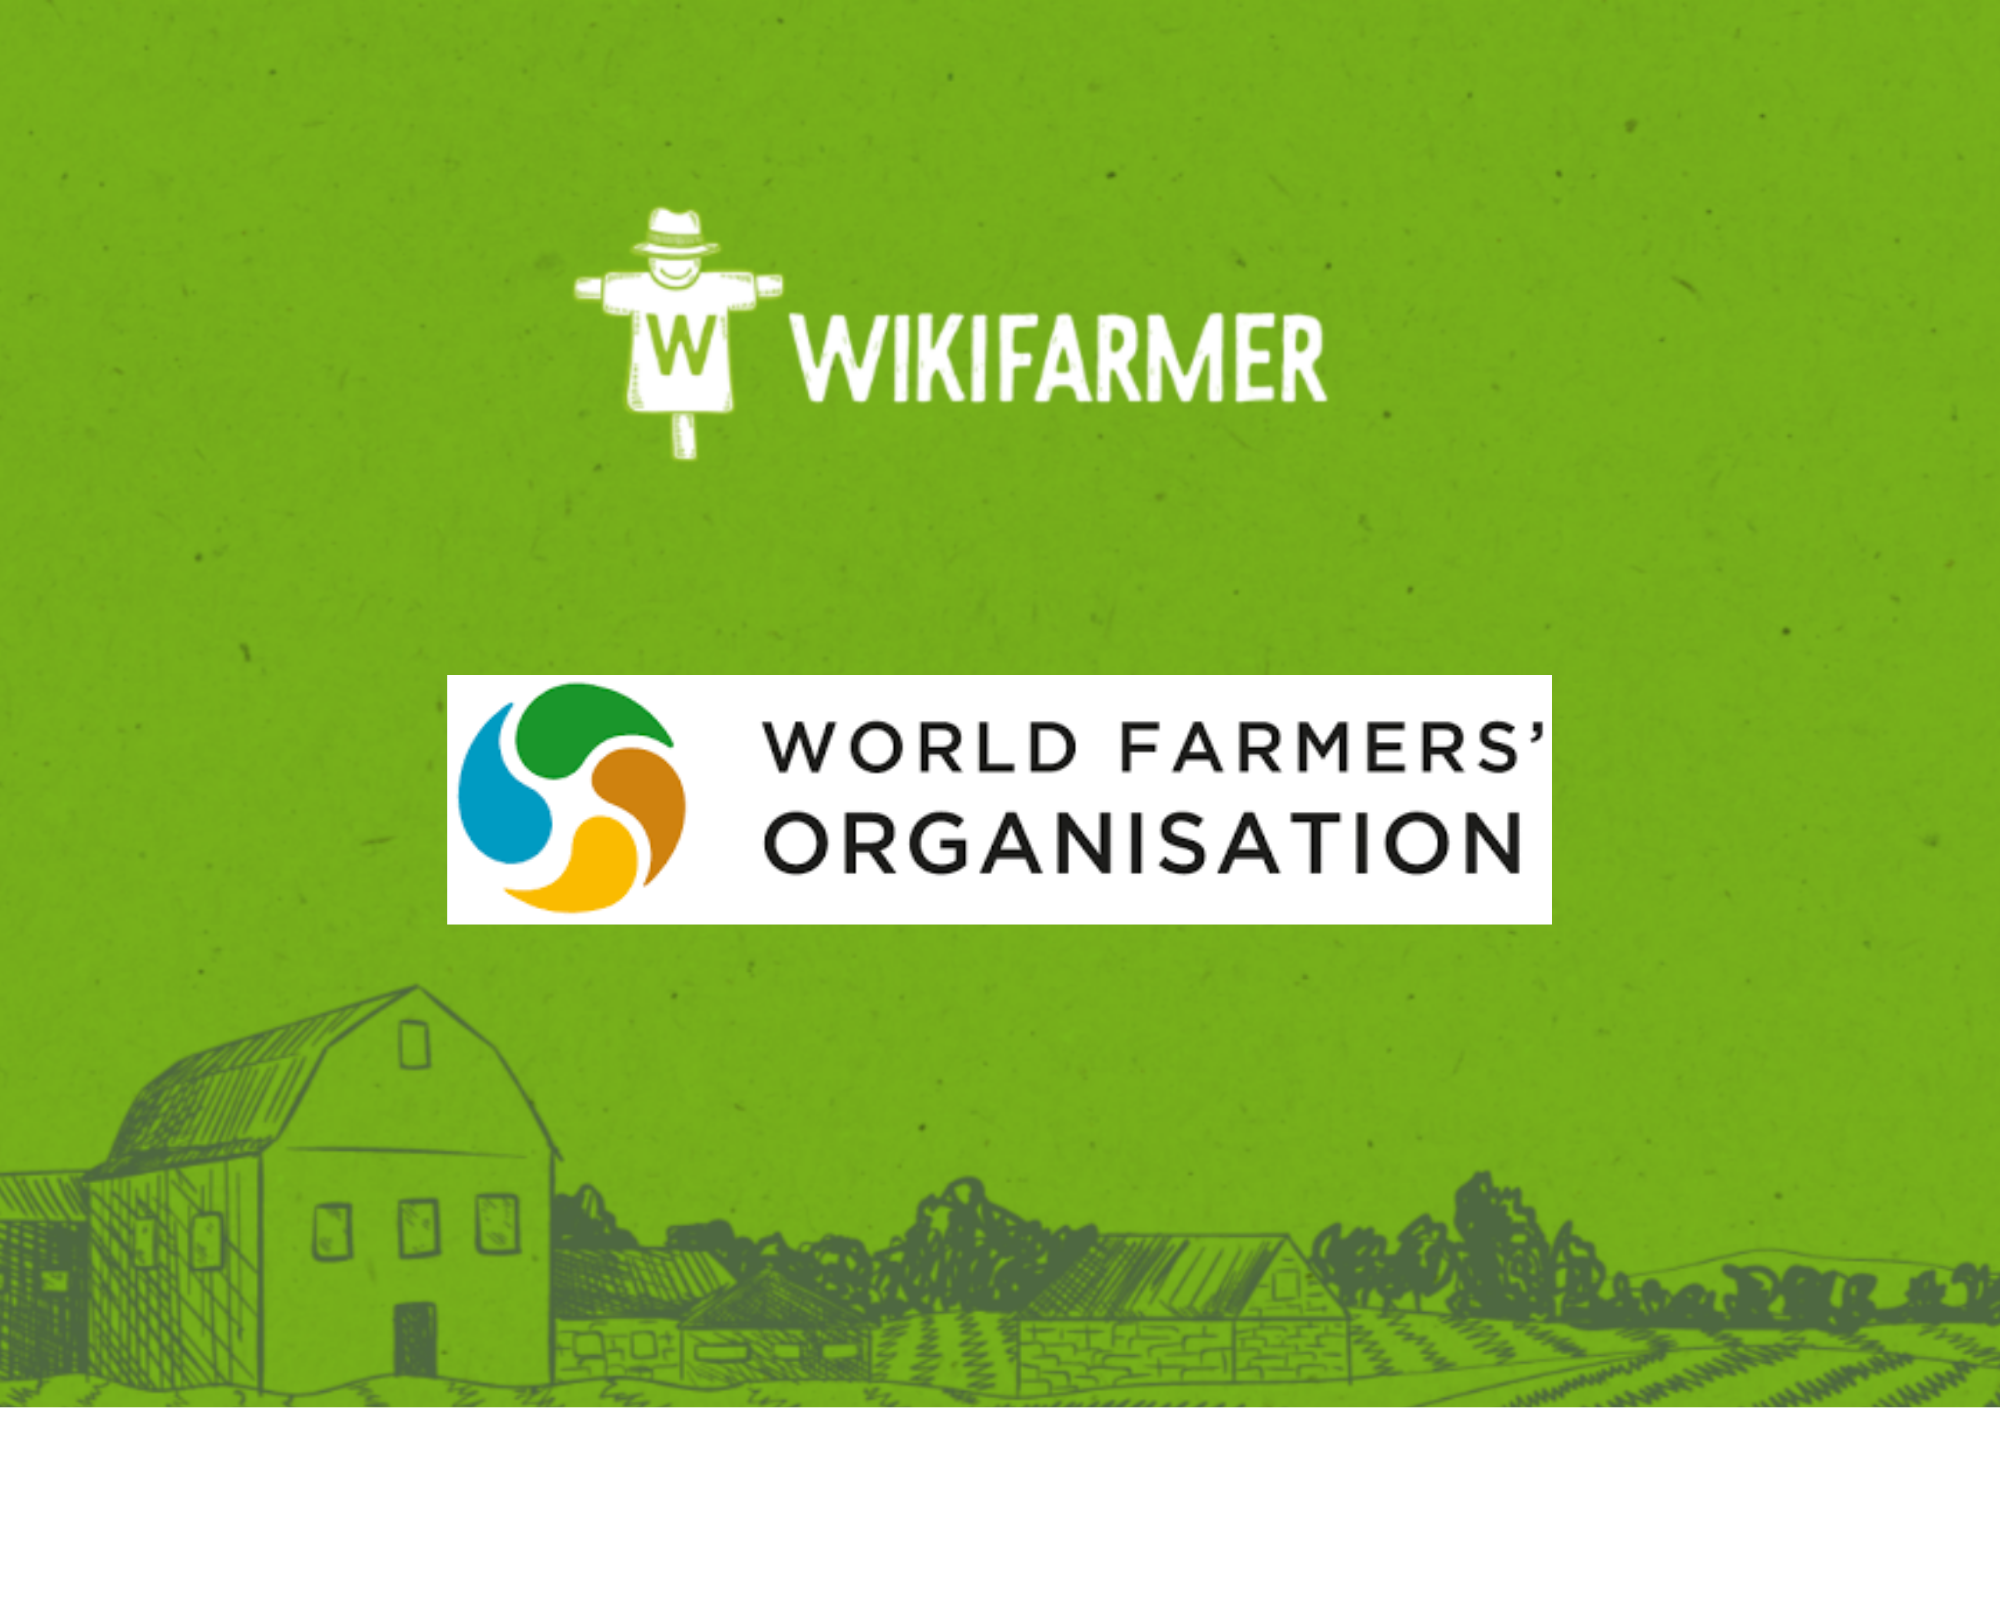 Partnership between Wikifarmer and World Farmers' Organization